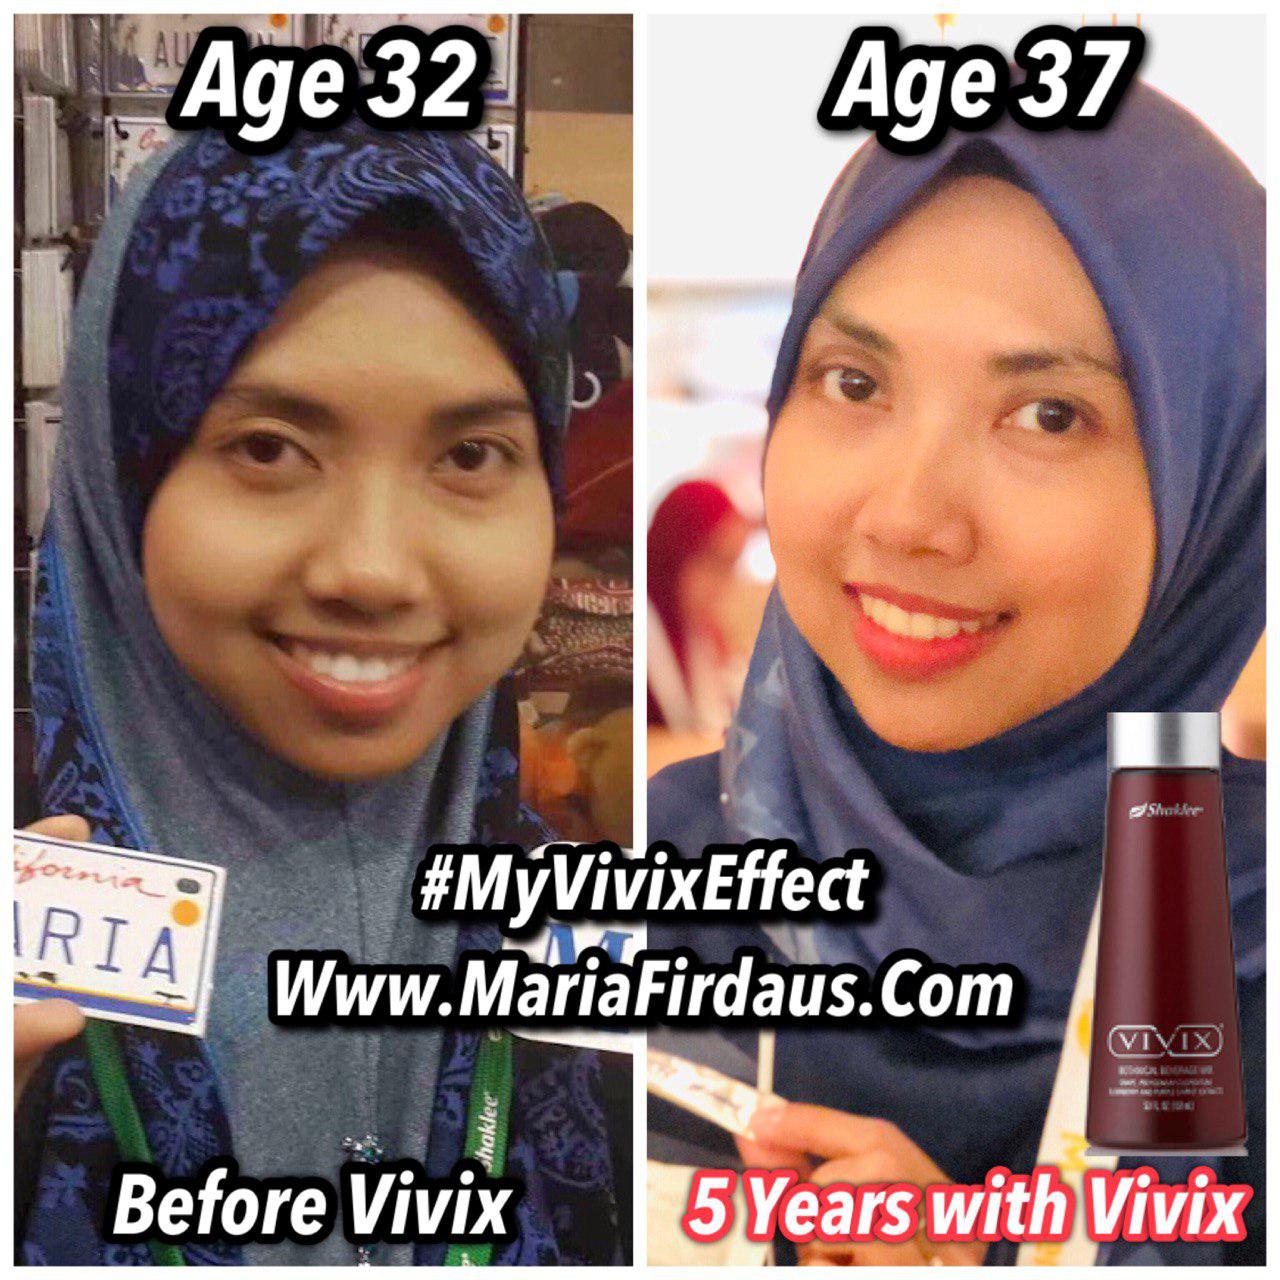 My Vivix Effect!